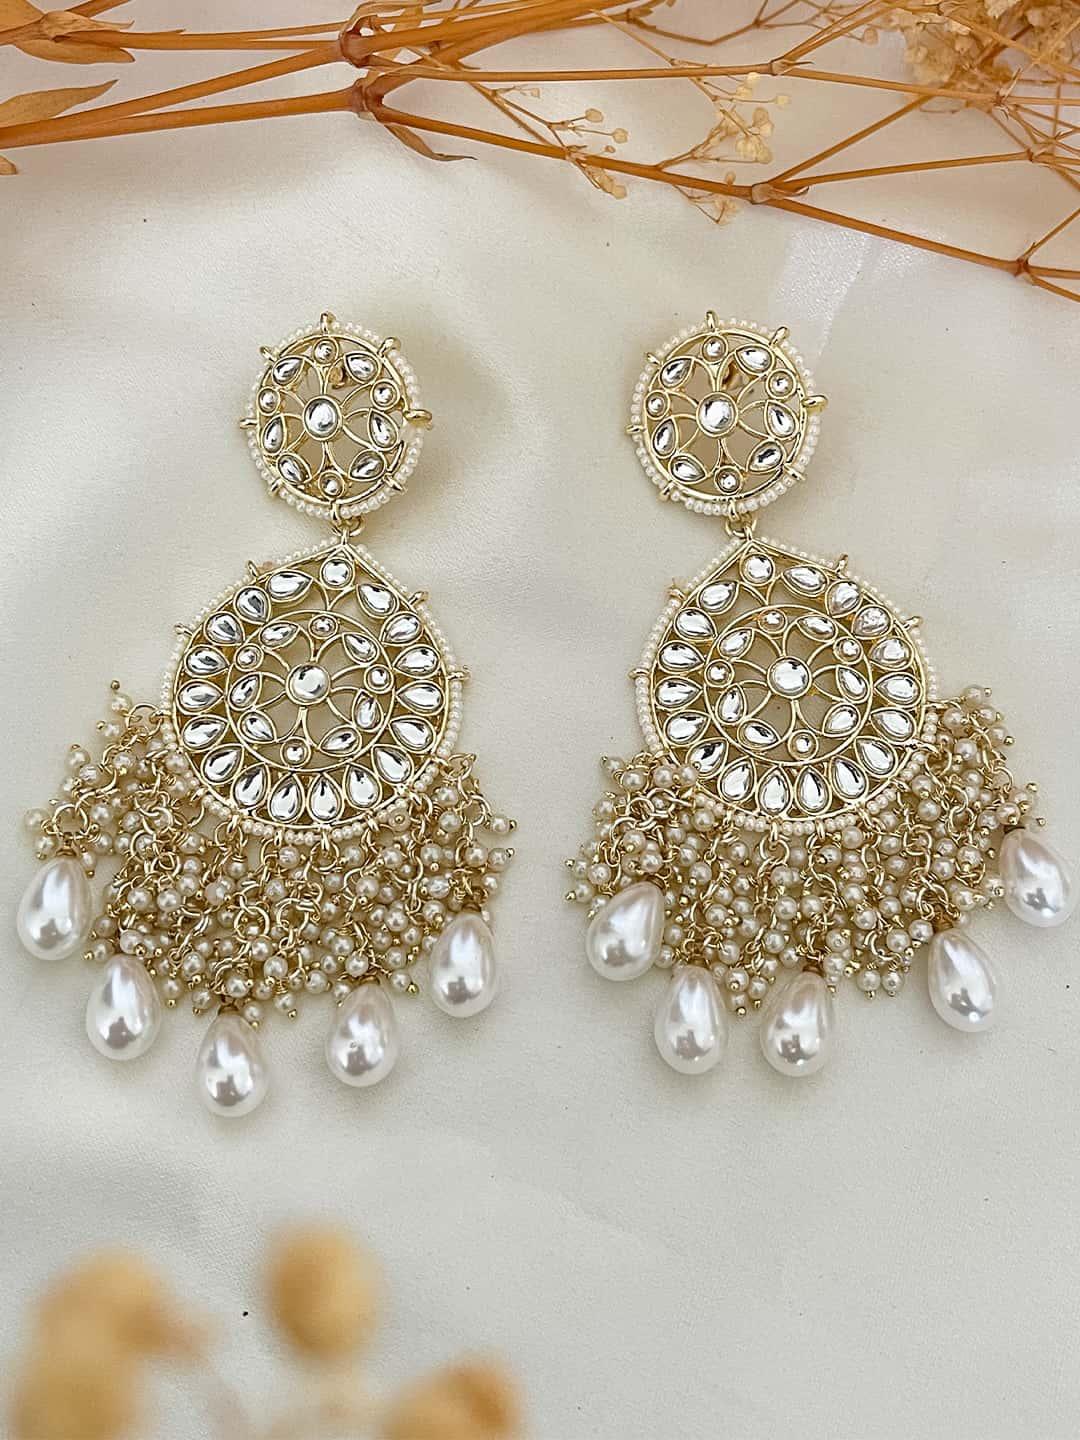 Ishhaara Shruti Prakash In Kundan Chandbali And Pearls Earrings